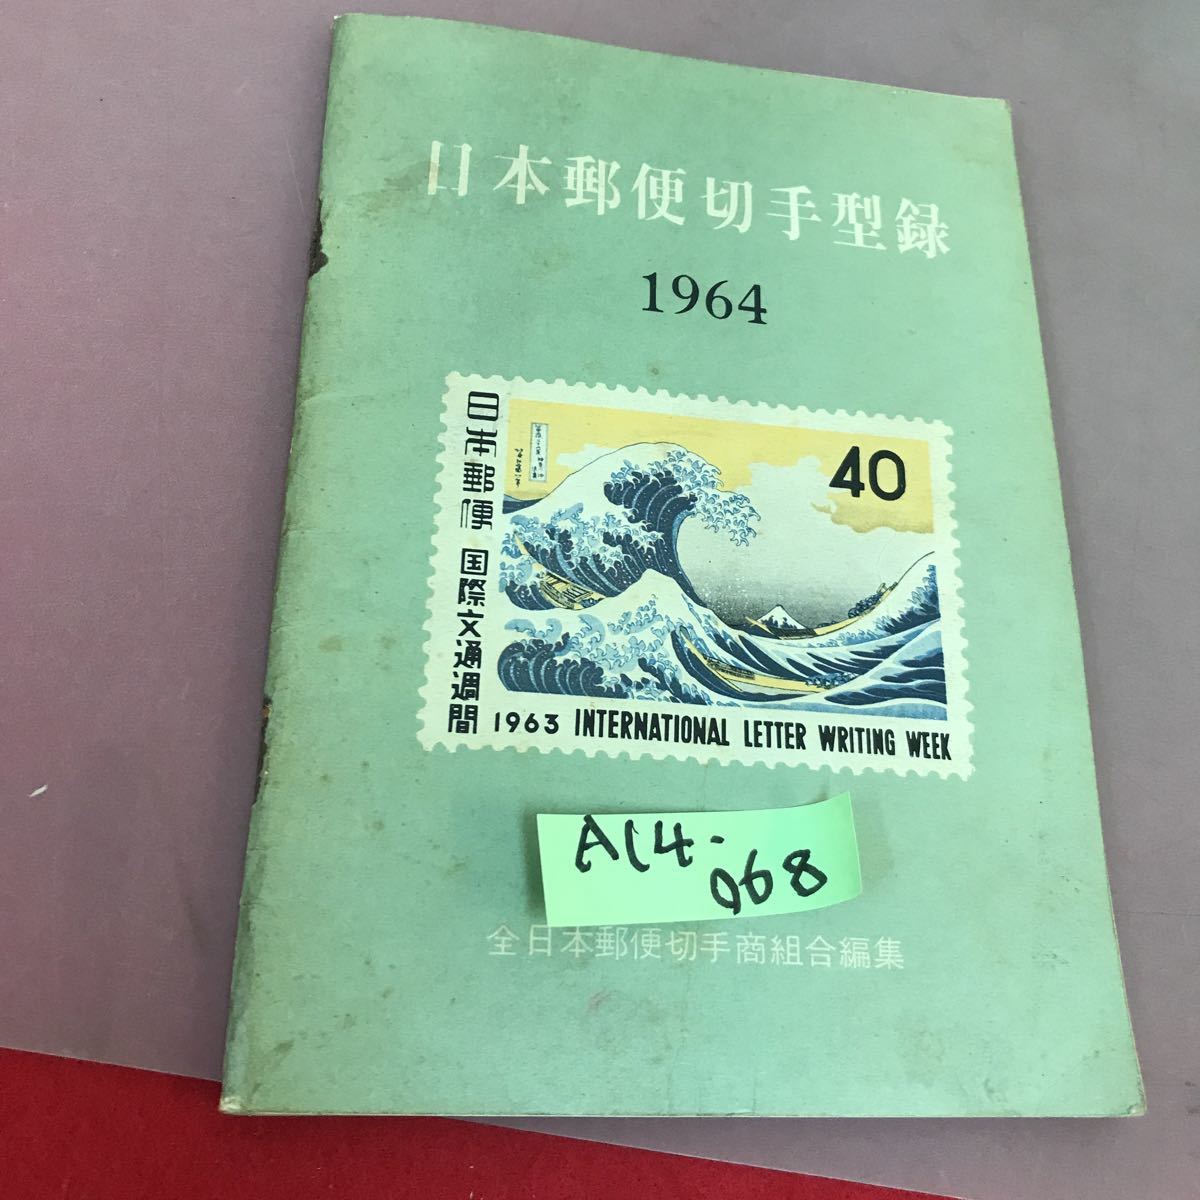 A14-068 日本郵便切手型録 1964 全日本郵便切手商組合 書き込み・汚れあり